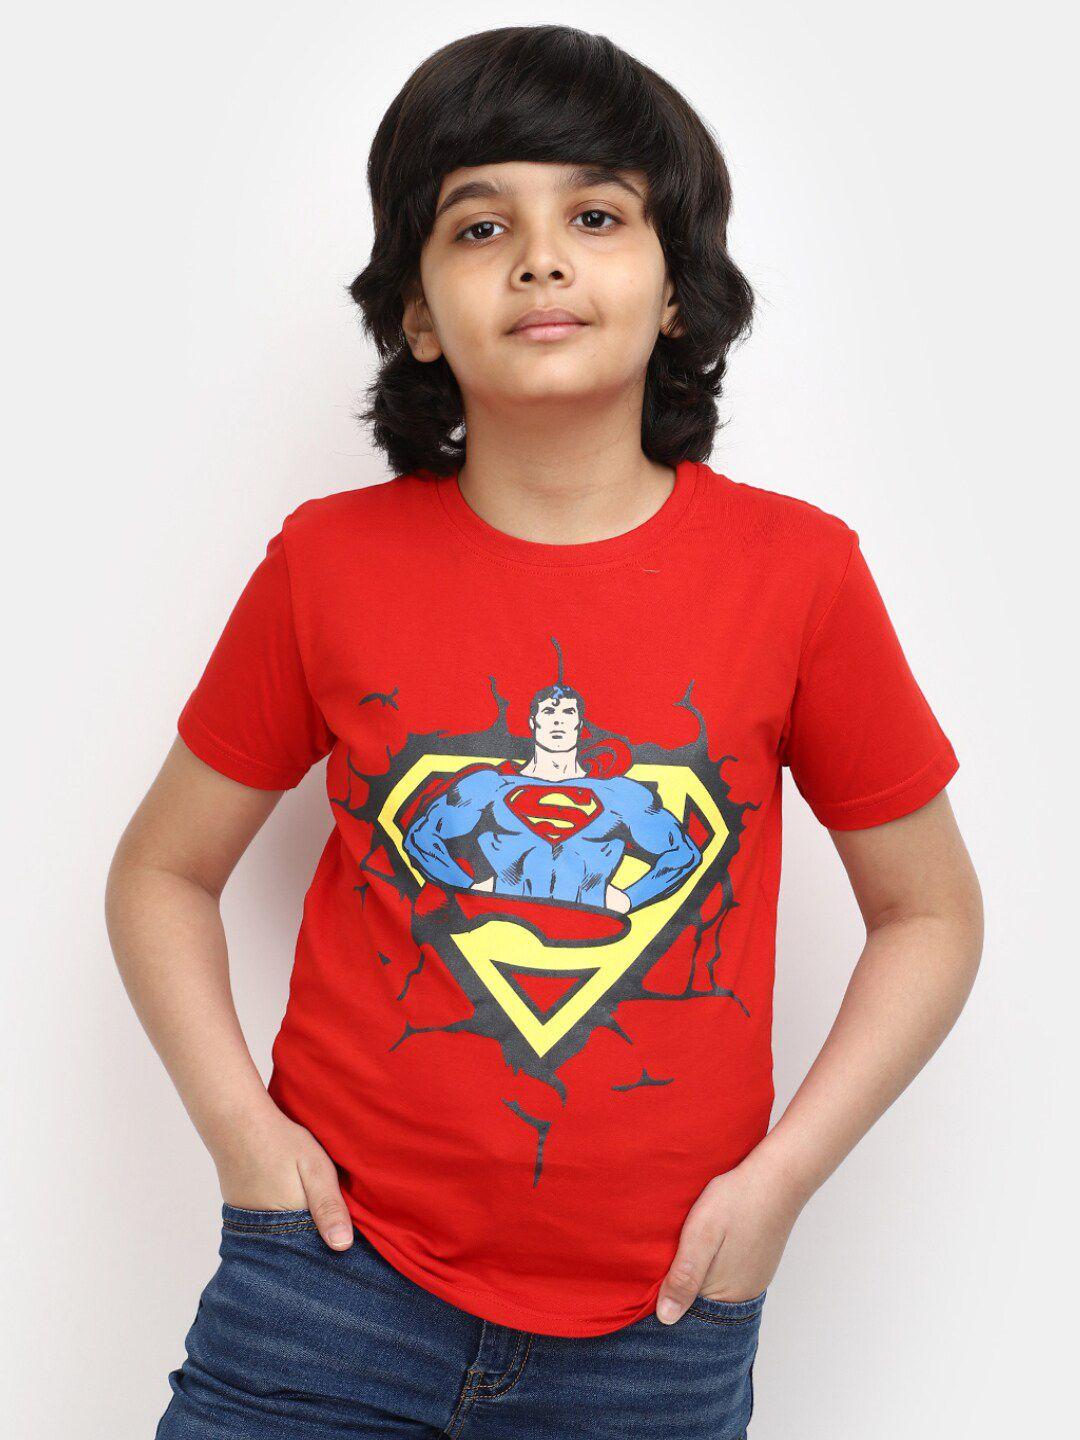 v-mart boys superman graphic printed cotton t-shirt